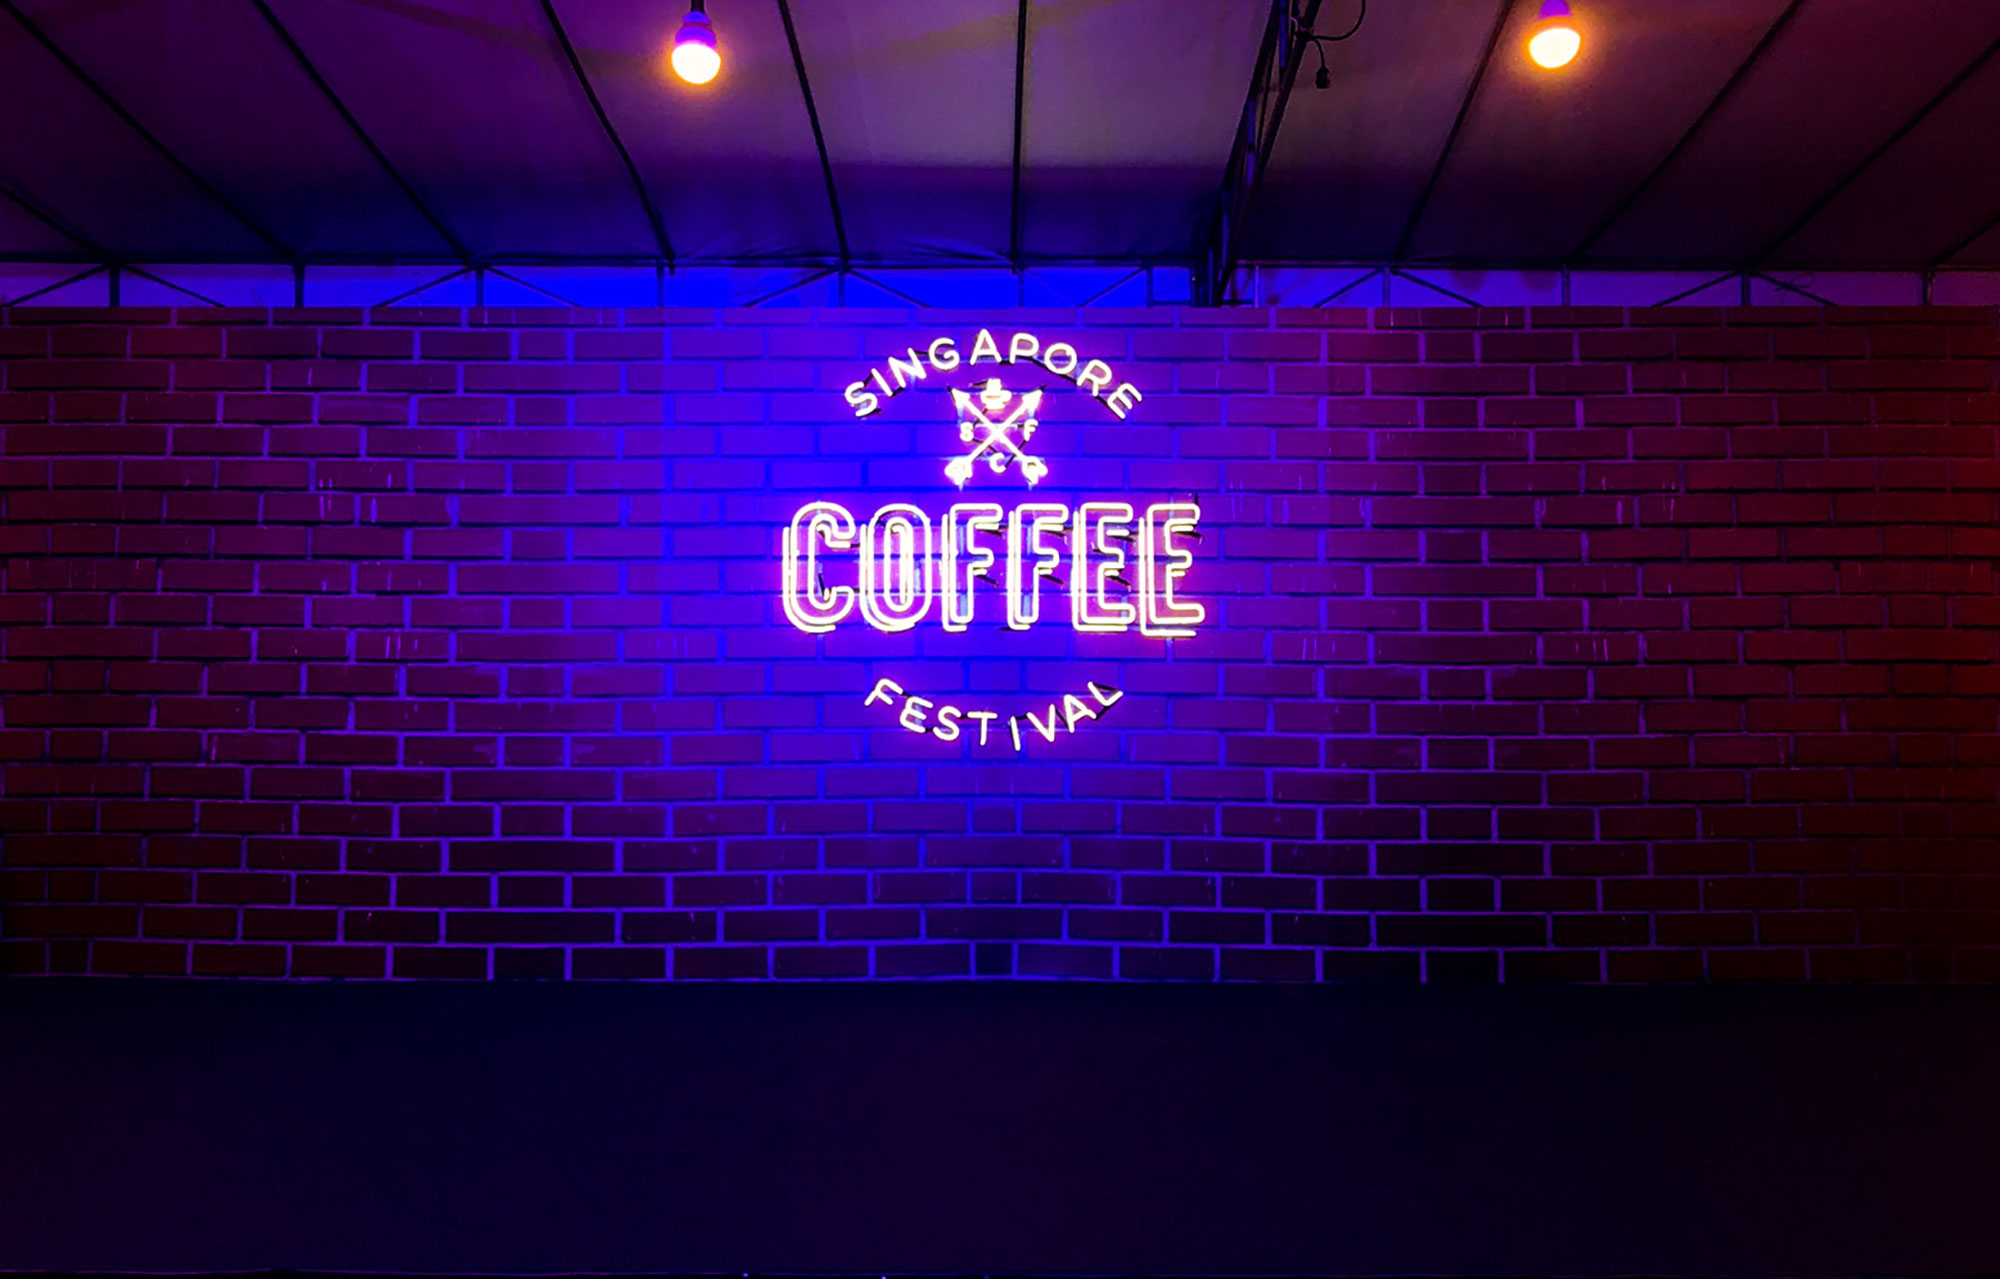 Singapore Coffee Festival 2017